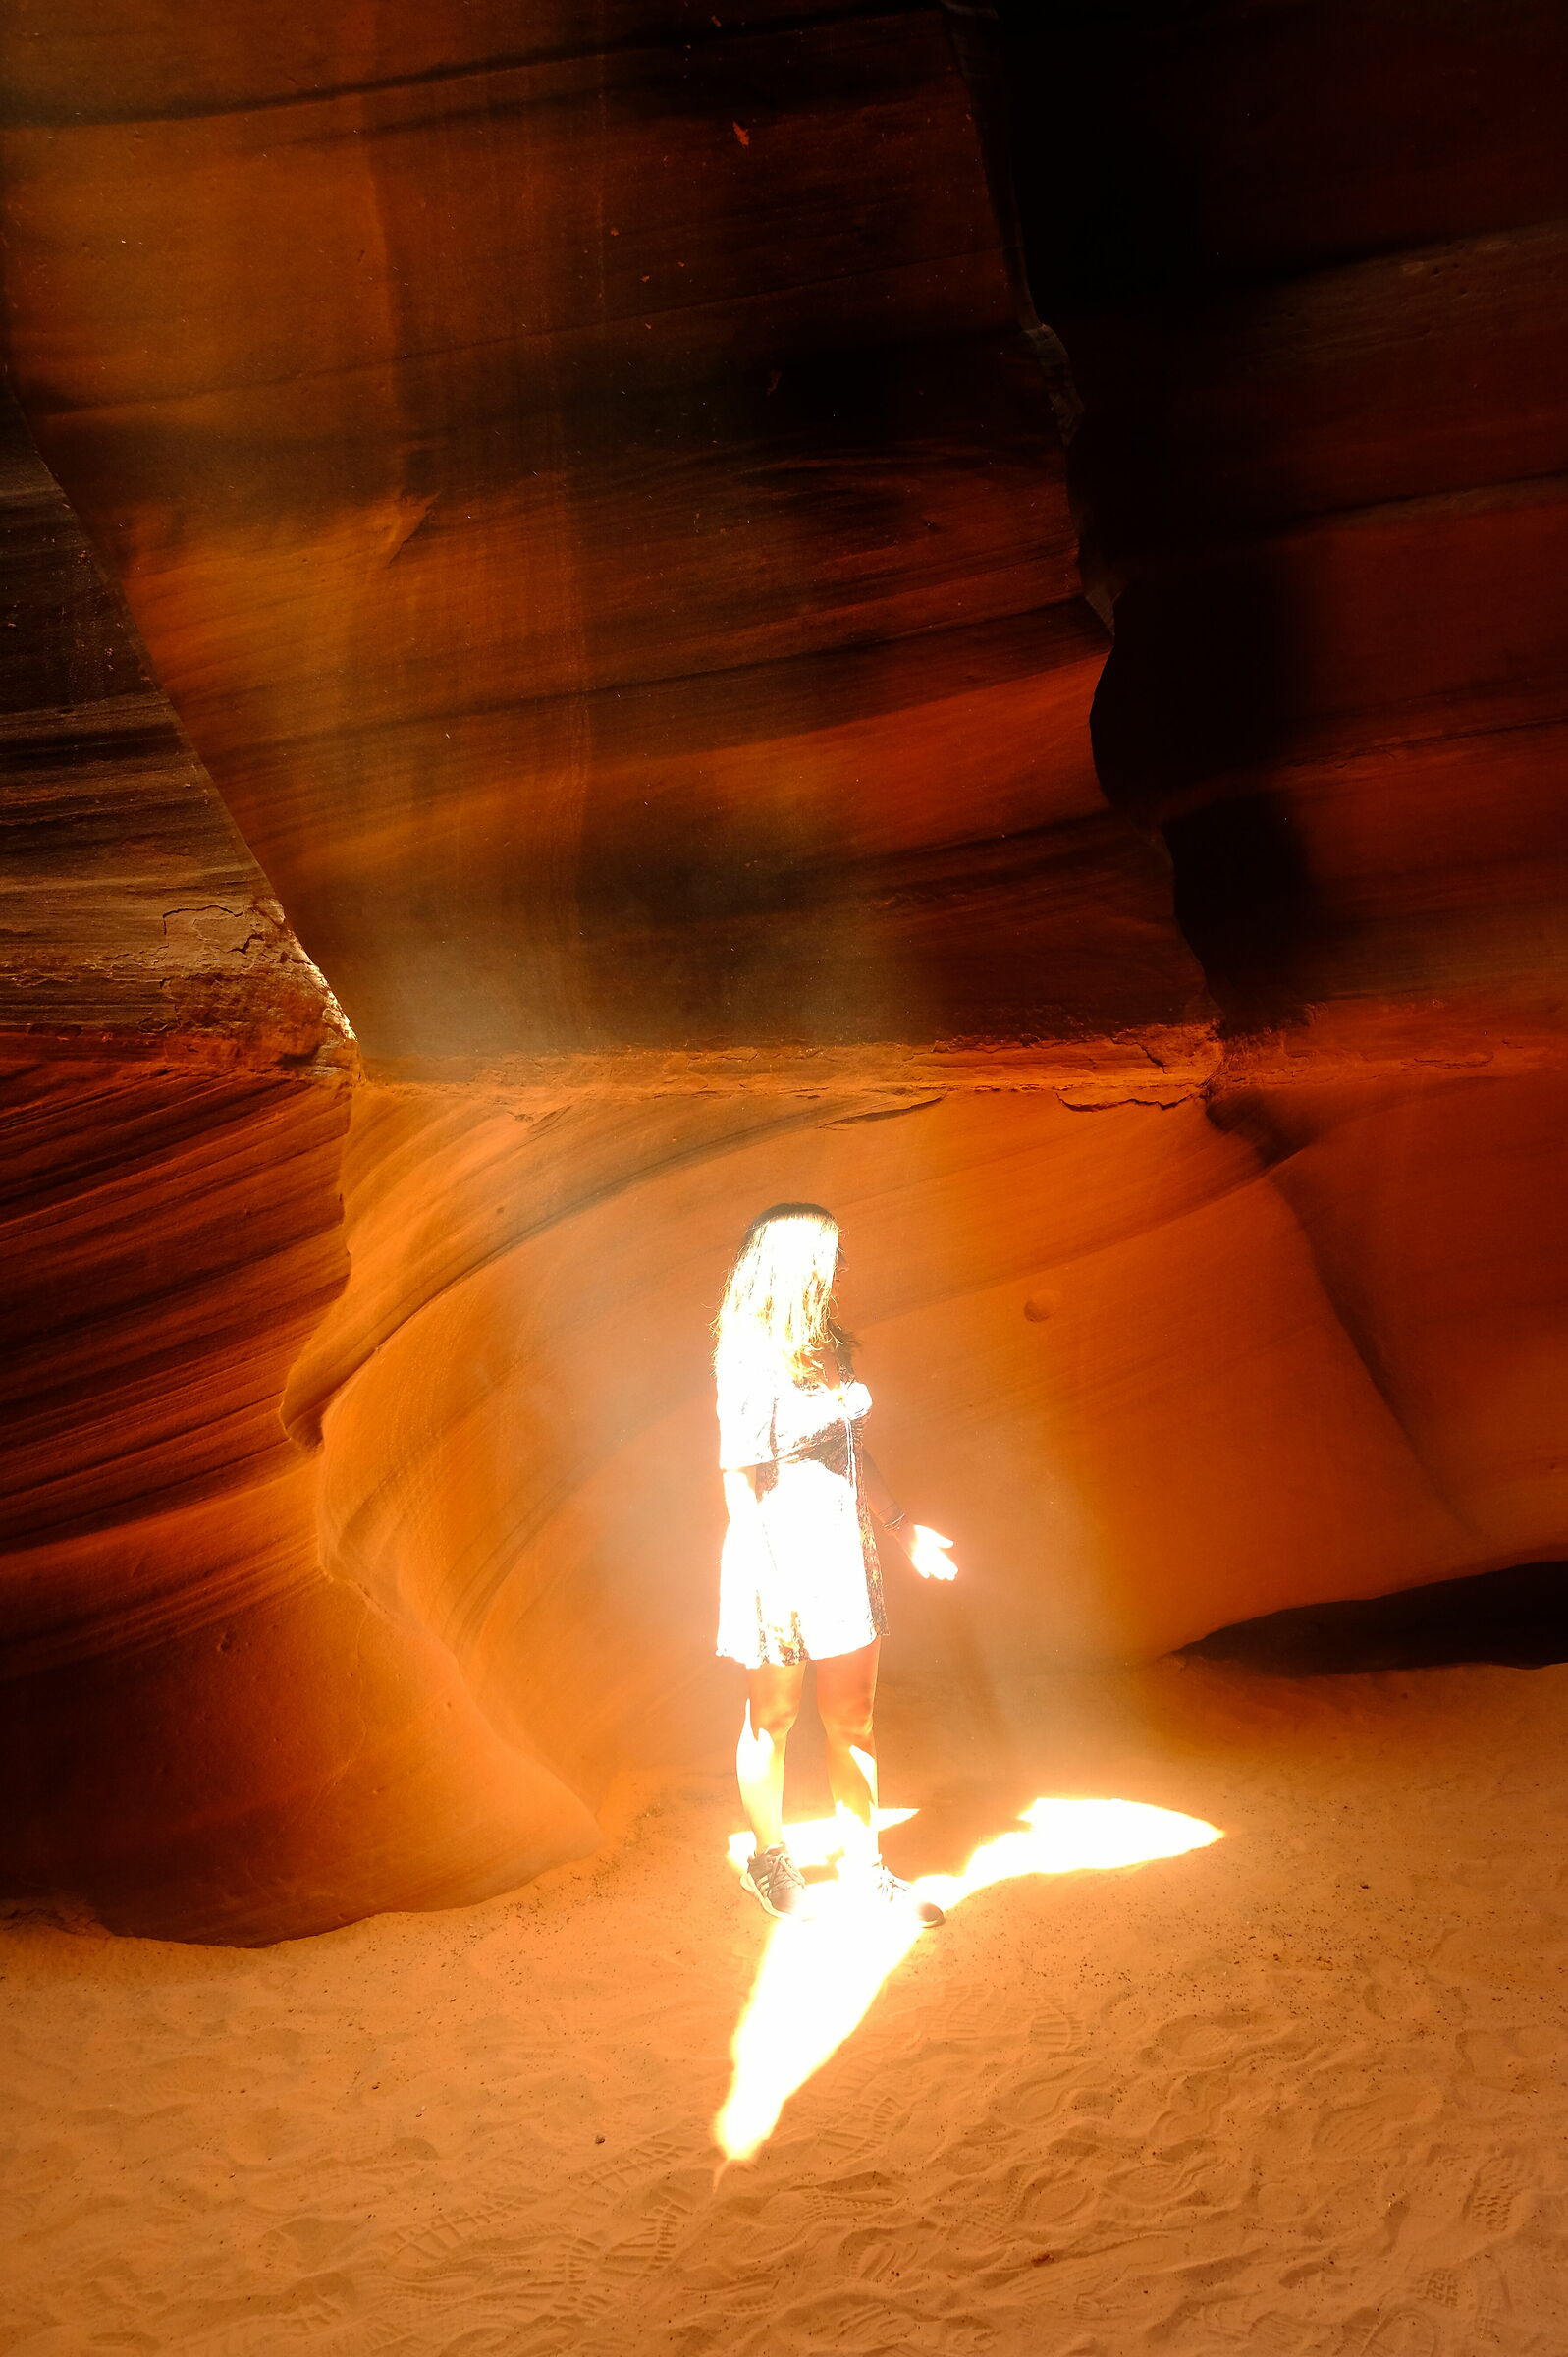 "Burned" by the Sun - Antelope Canyon Arizona...